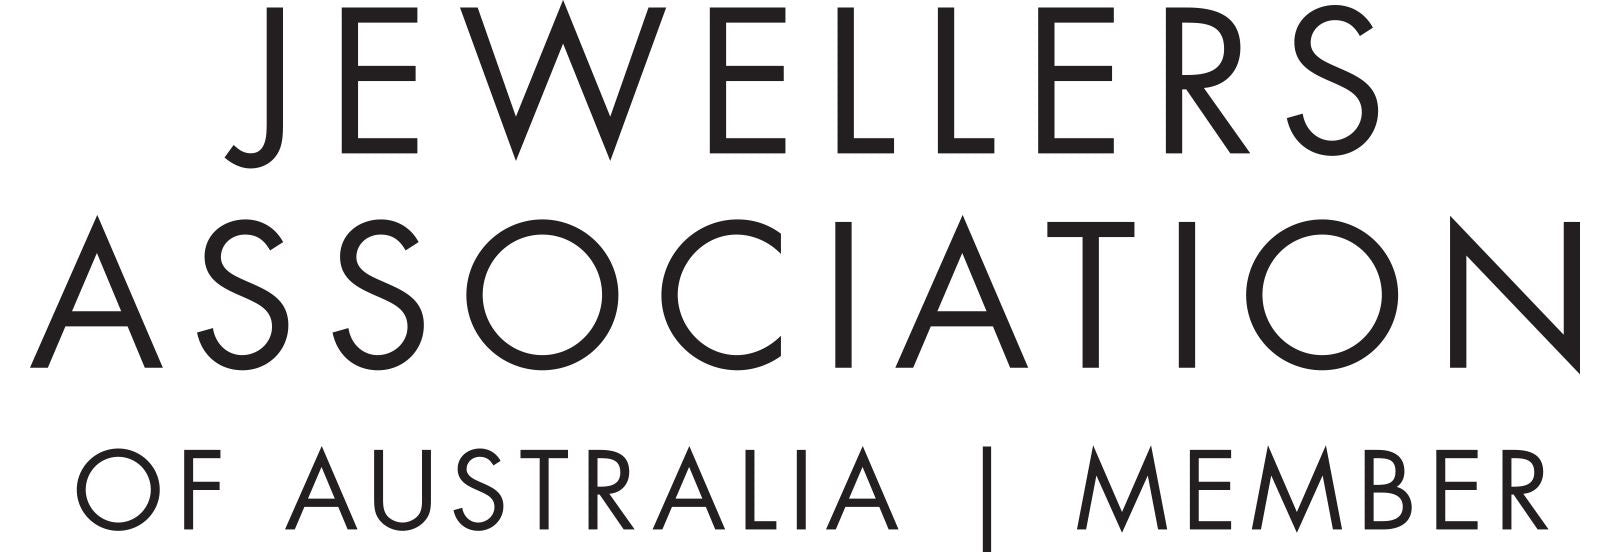 Jewellers Association of Australia logo